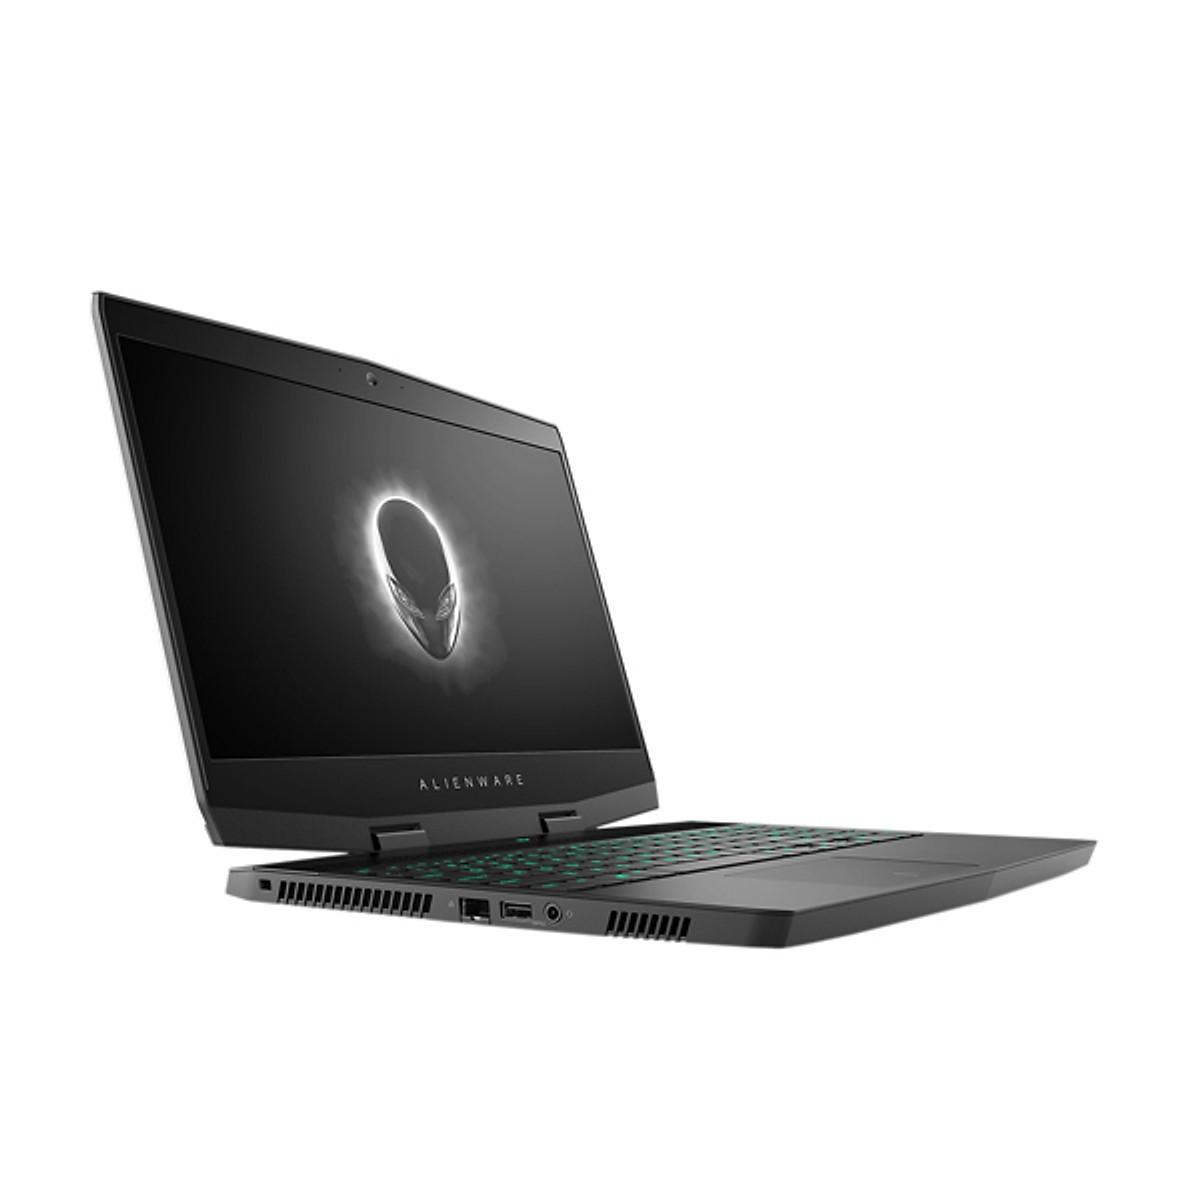 Review Laptop Alienware M15 (i7/8GB/1TB)